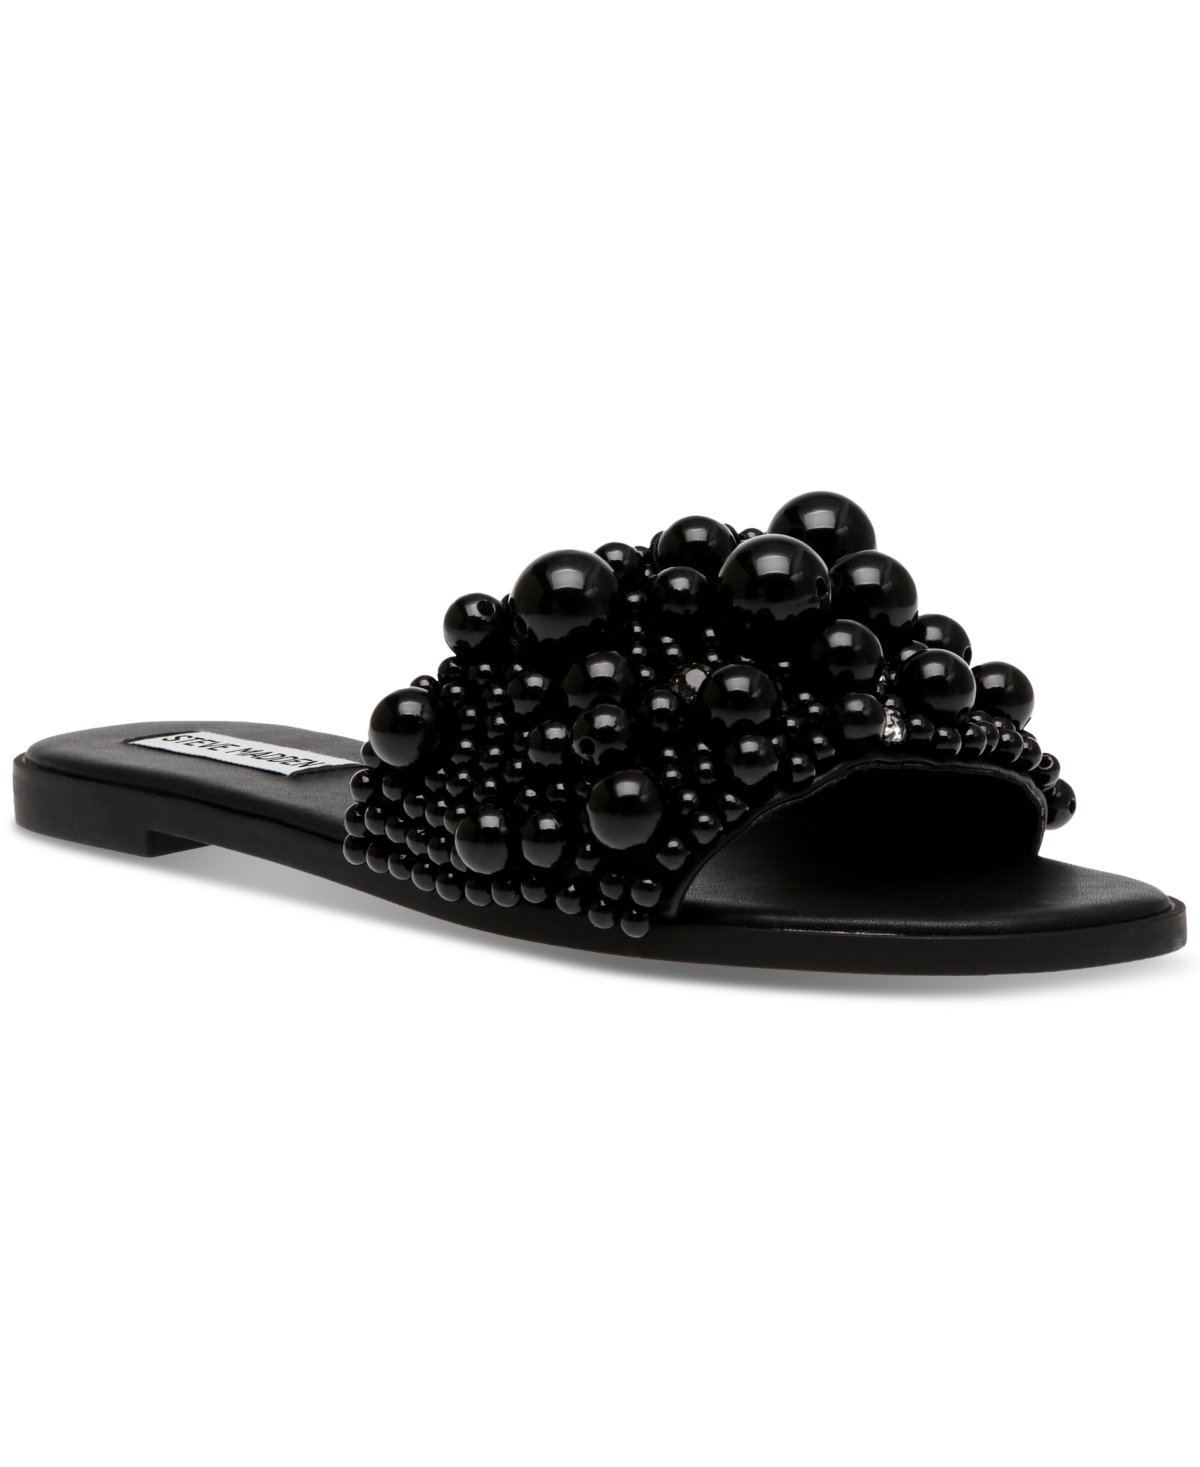 Steve Madden Women's Knicky Embellished Slide Sandals In Black Pearl Multi